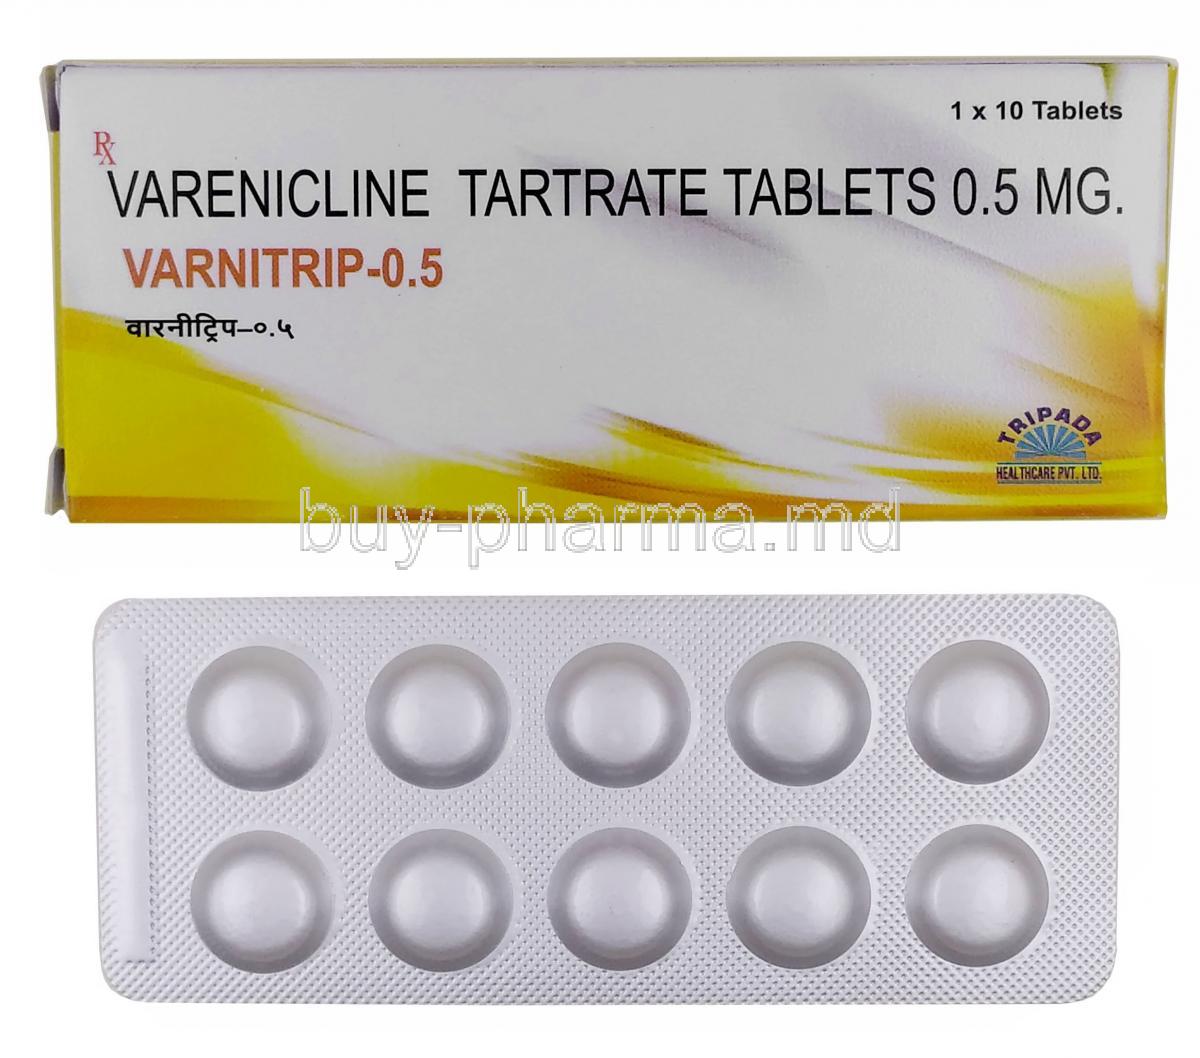 Varnitrip-0.5, Varenicline 0.5mg, Tripada Healthcare, Box, Blisterpack